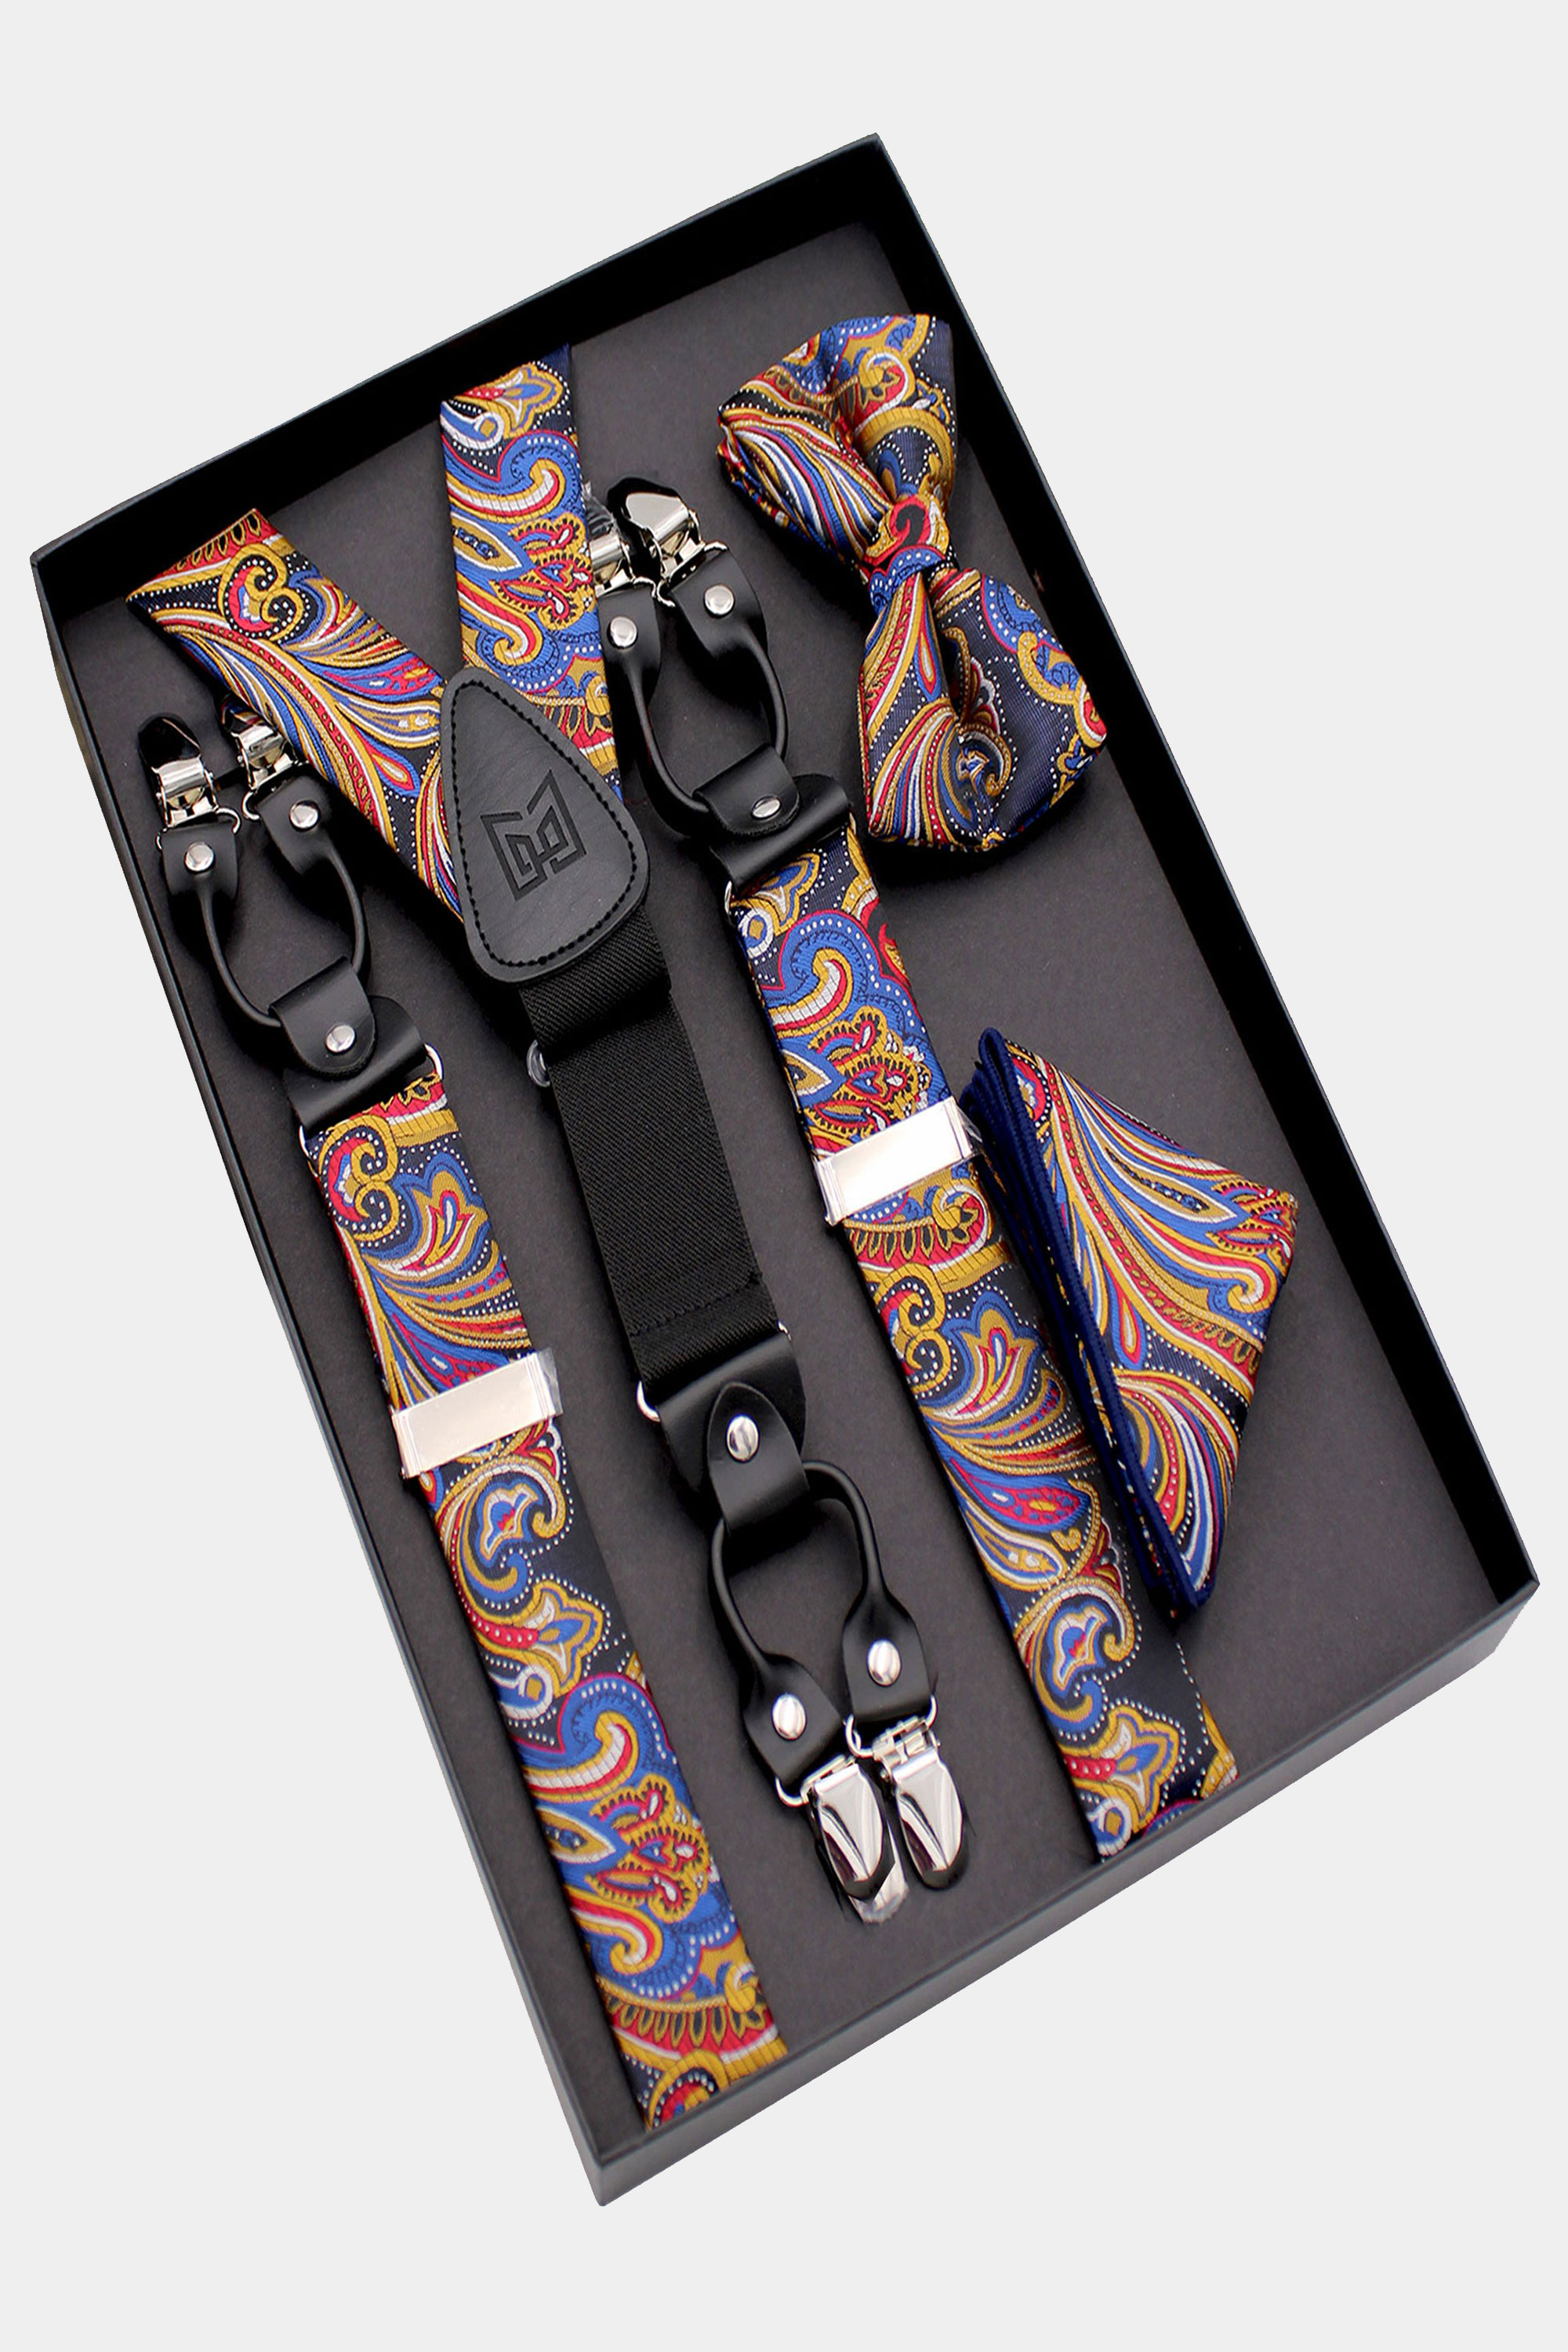 Paisley Suspender, Bow Tie, Pocket Square Set For Men's Tuxedo Suspenders :  Adjustable Braces, Strong Enhanced Clips Kids Red